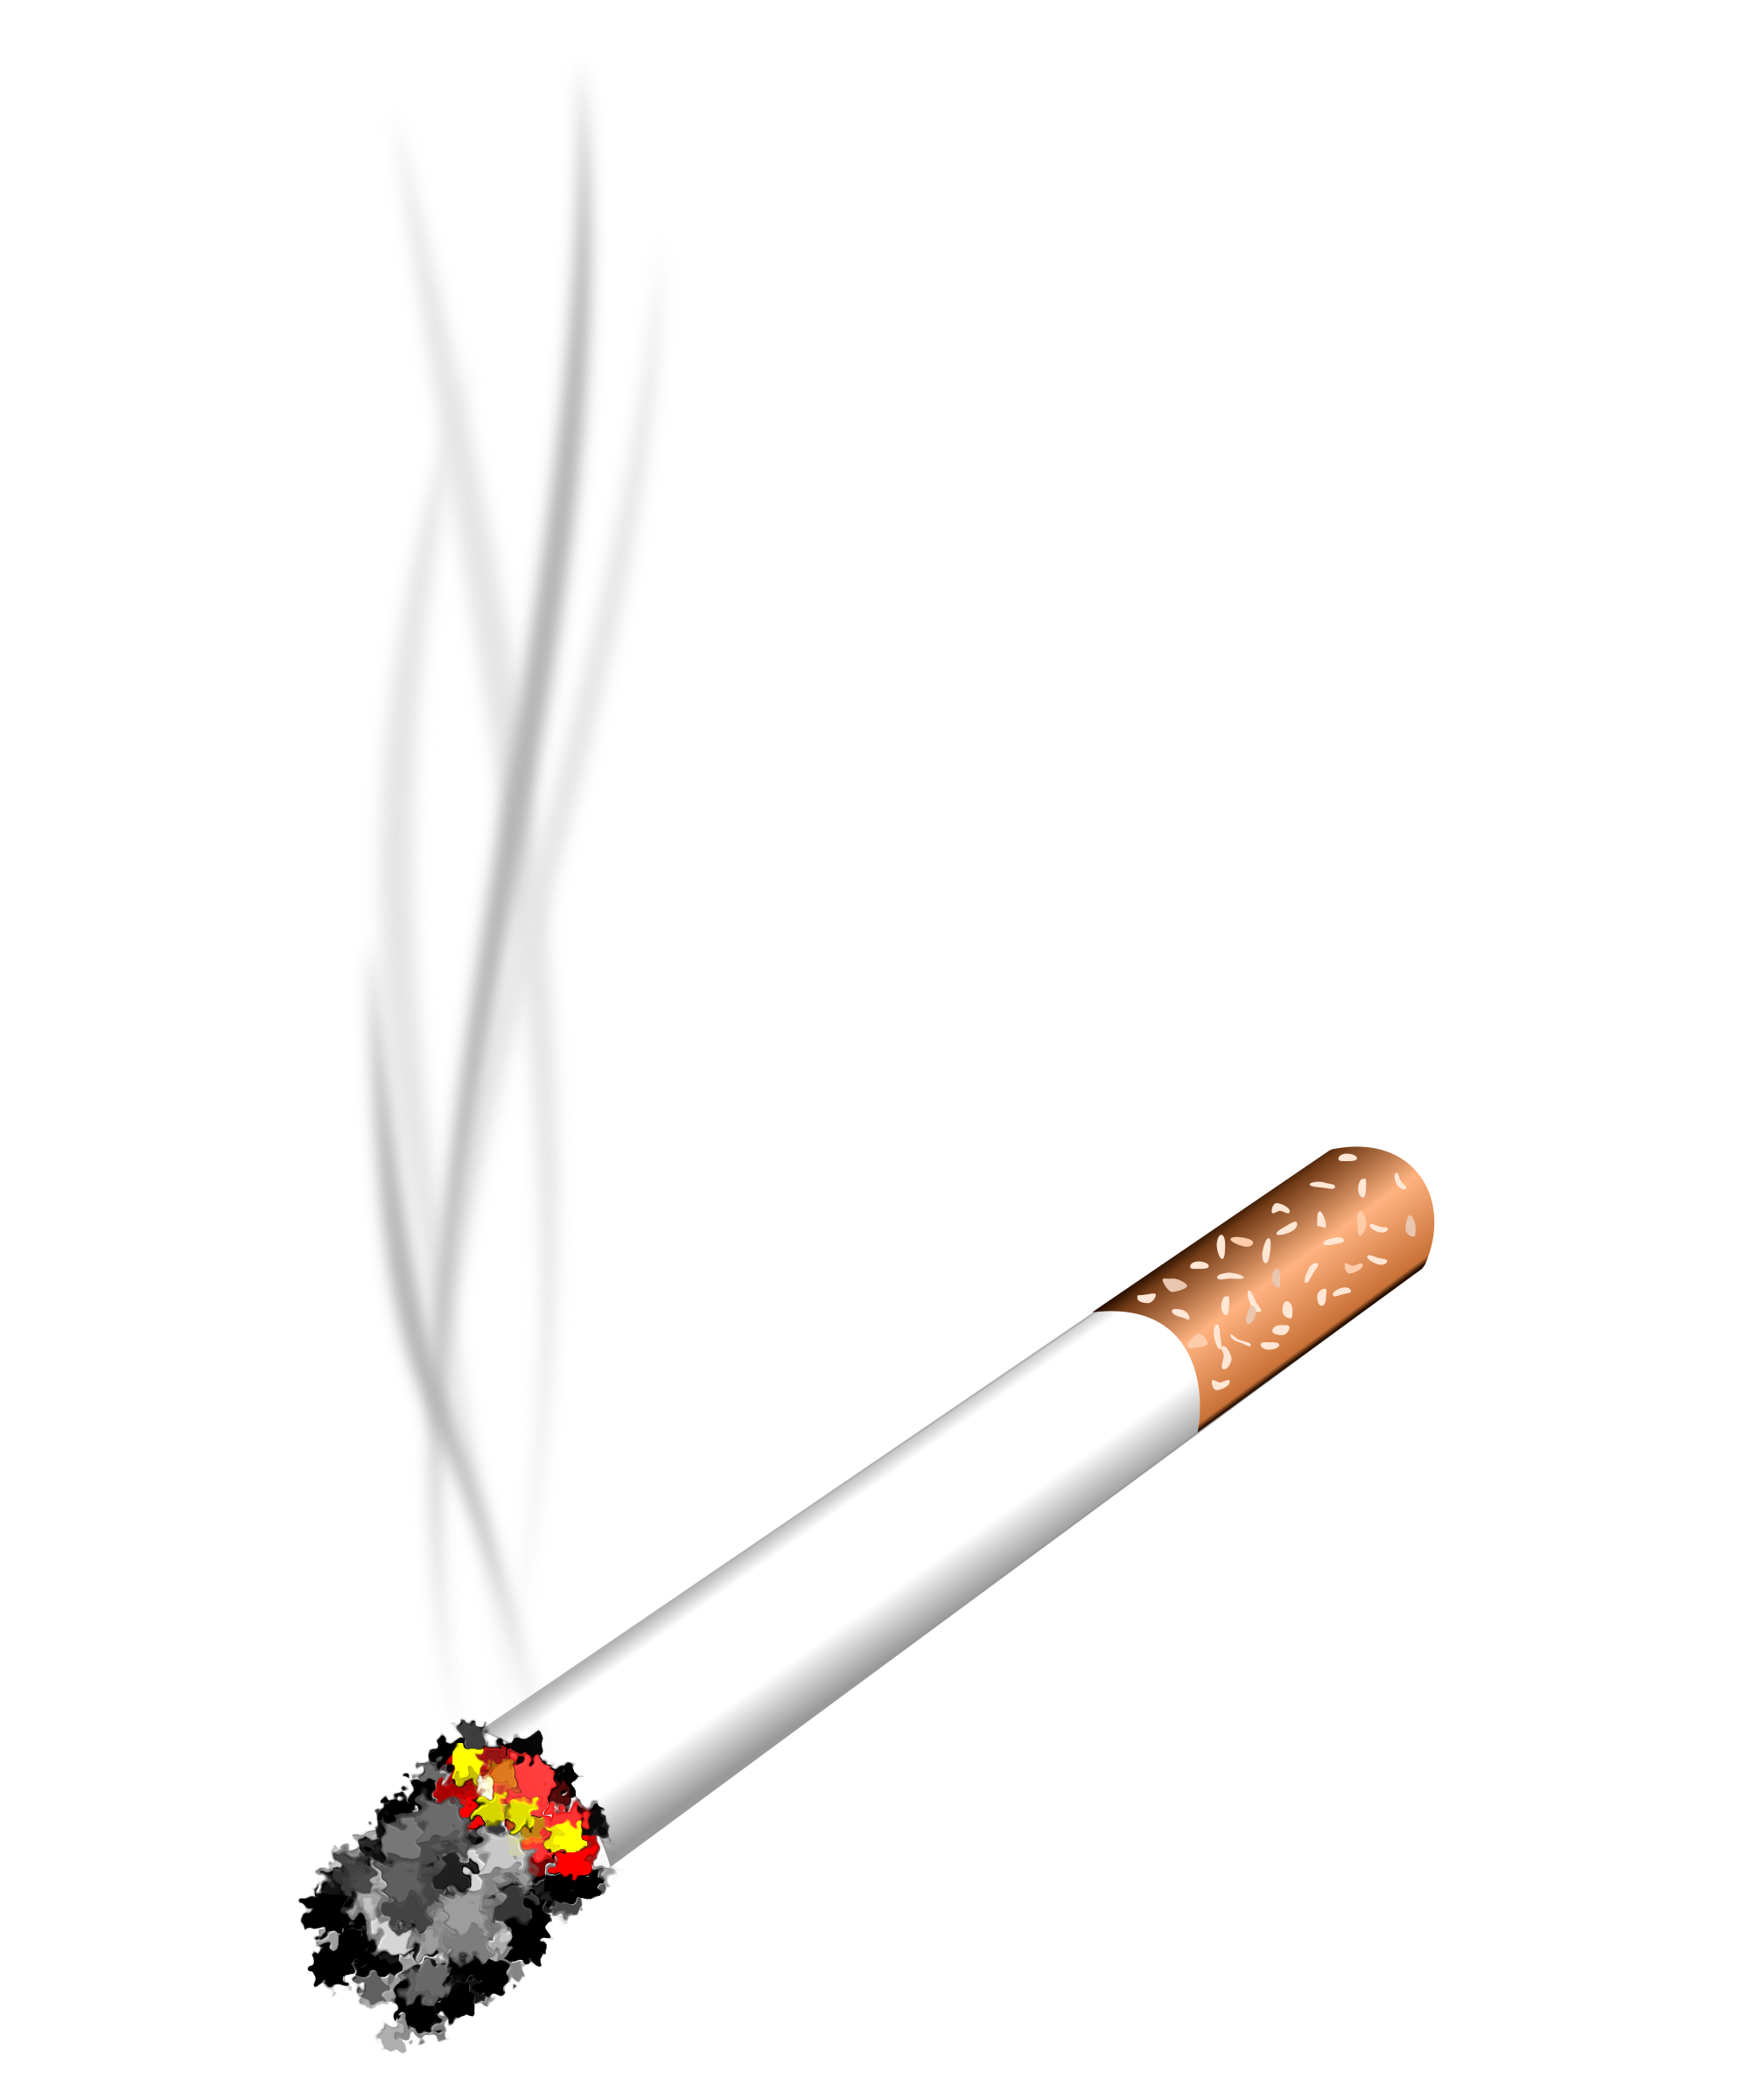 Thug Life Cigarette PNG Transparent Image